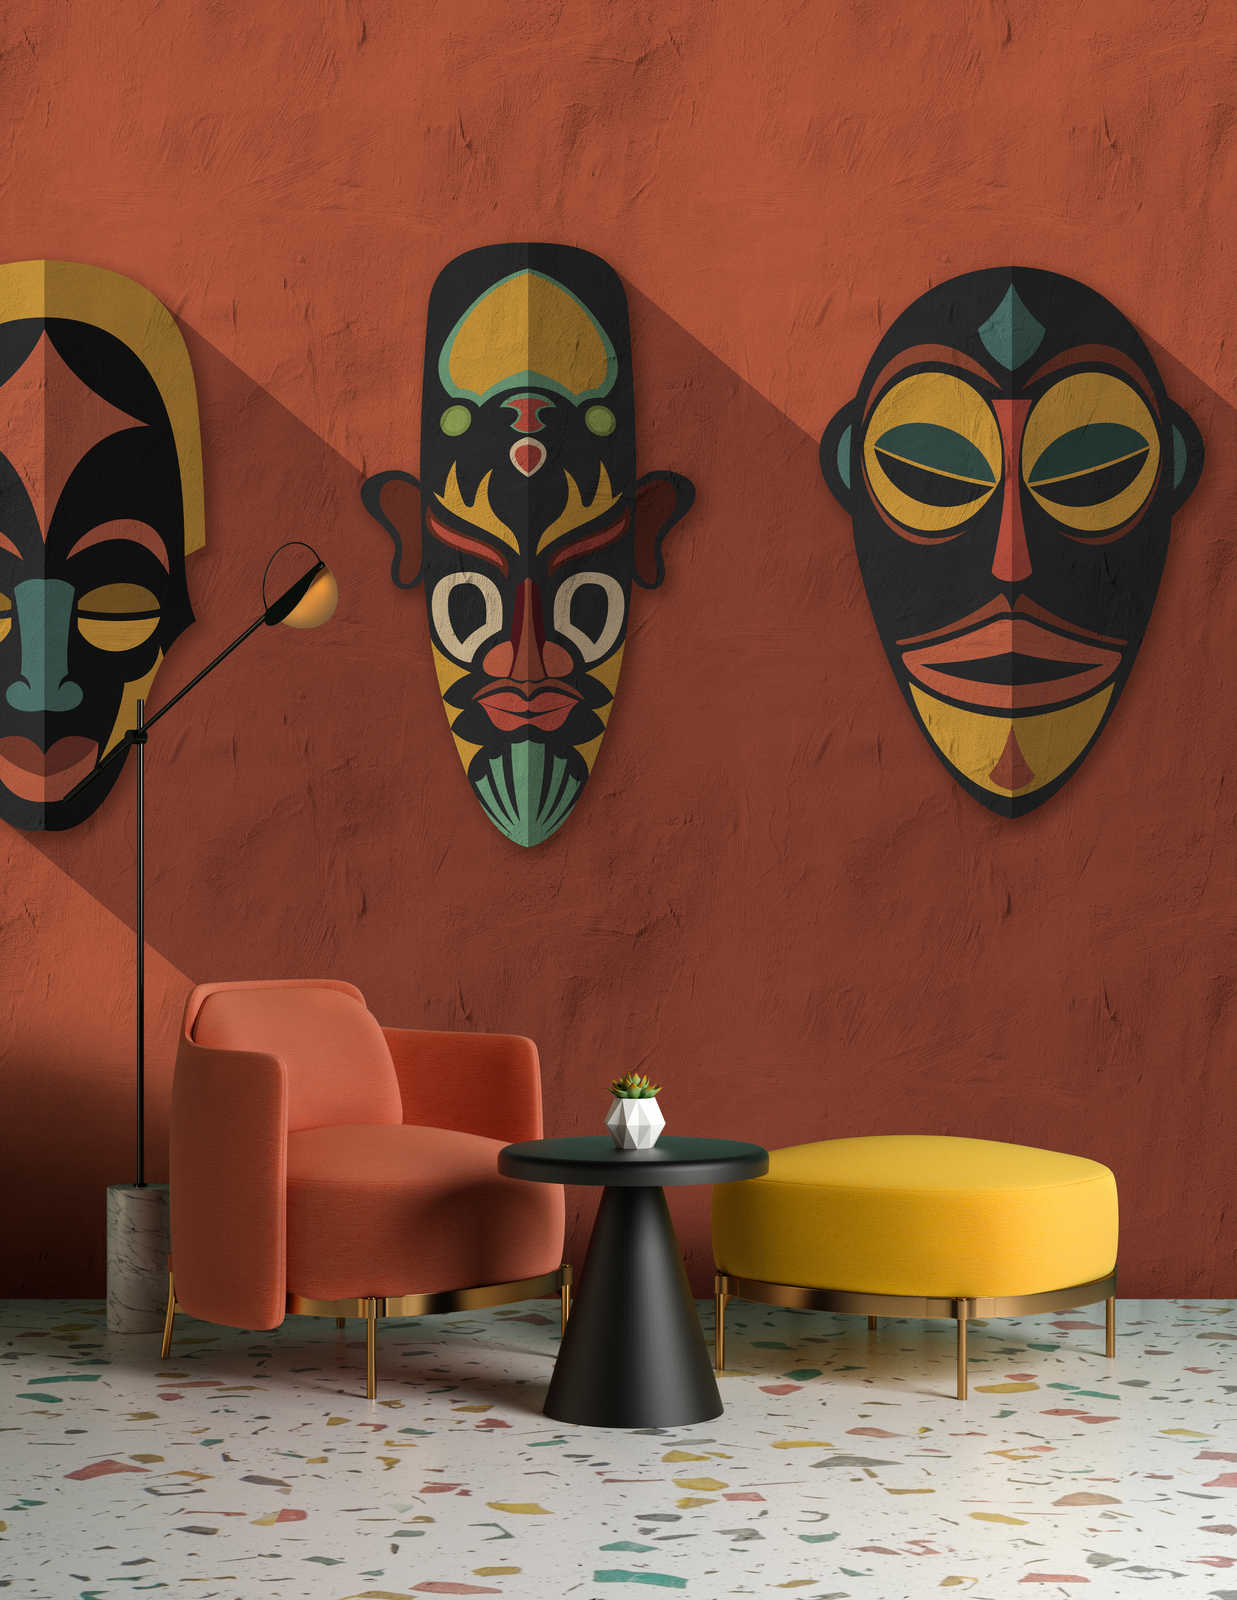             Zulu 2 - Papier peint Terracotta Orange, Africa Masks Zulu Design
        